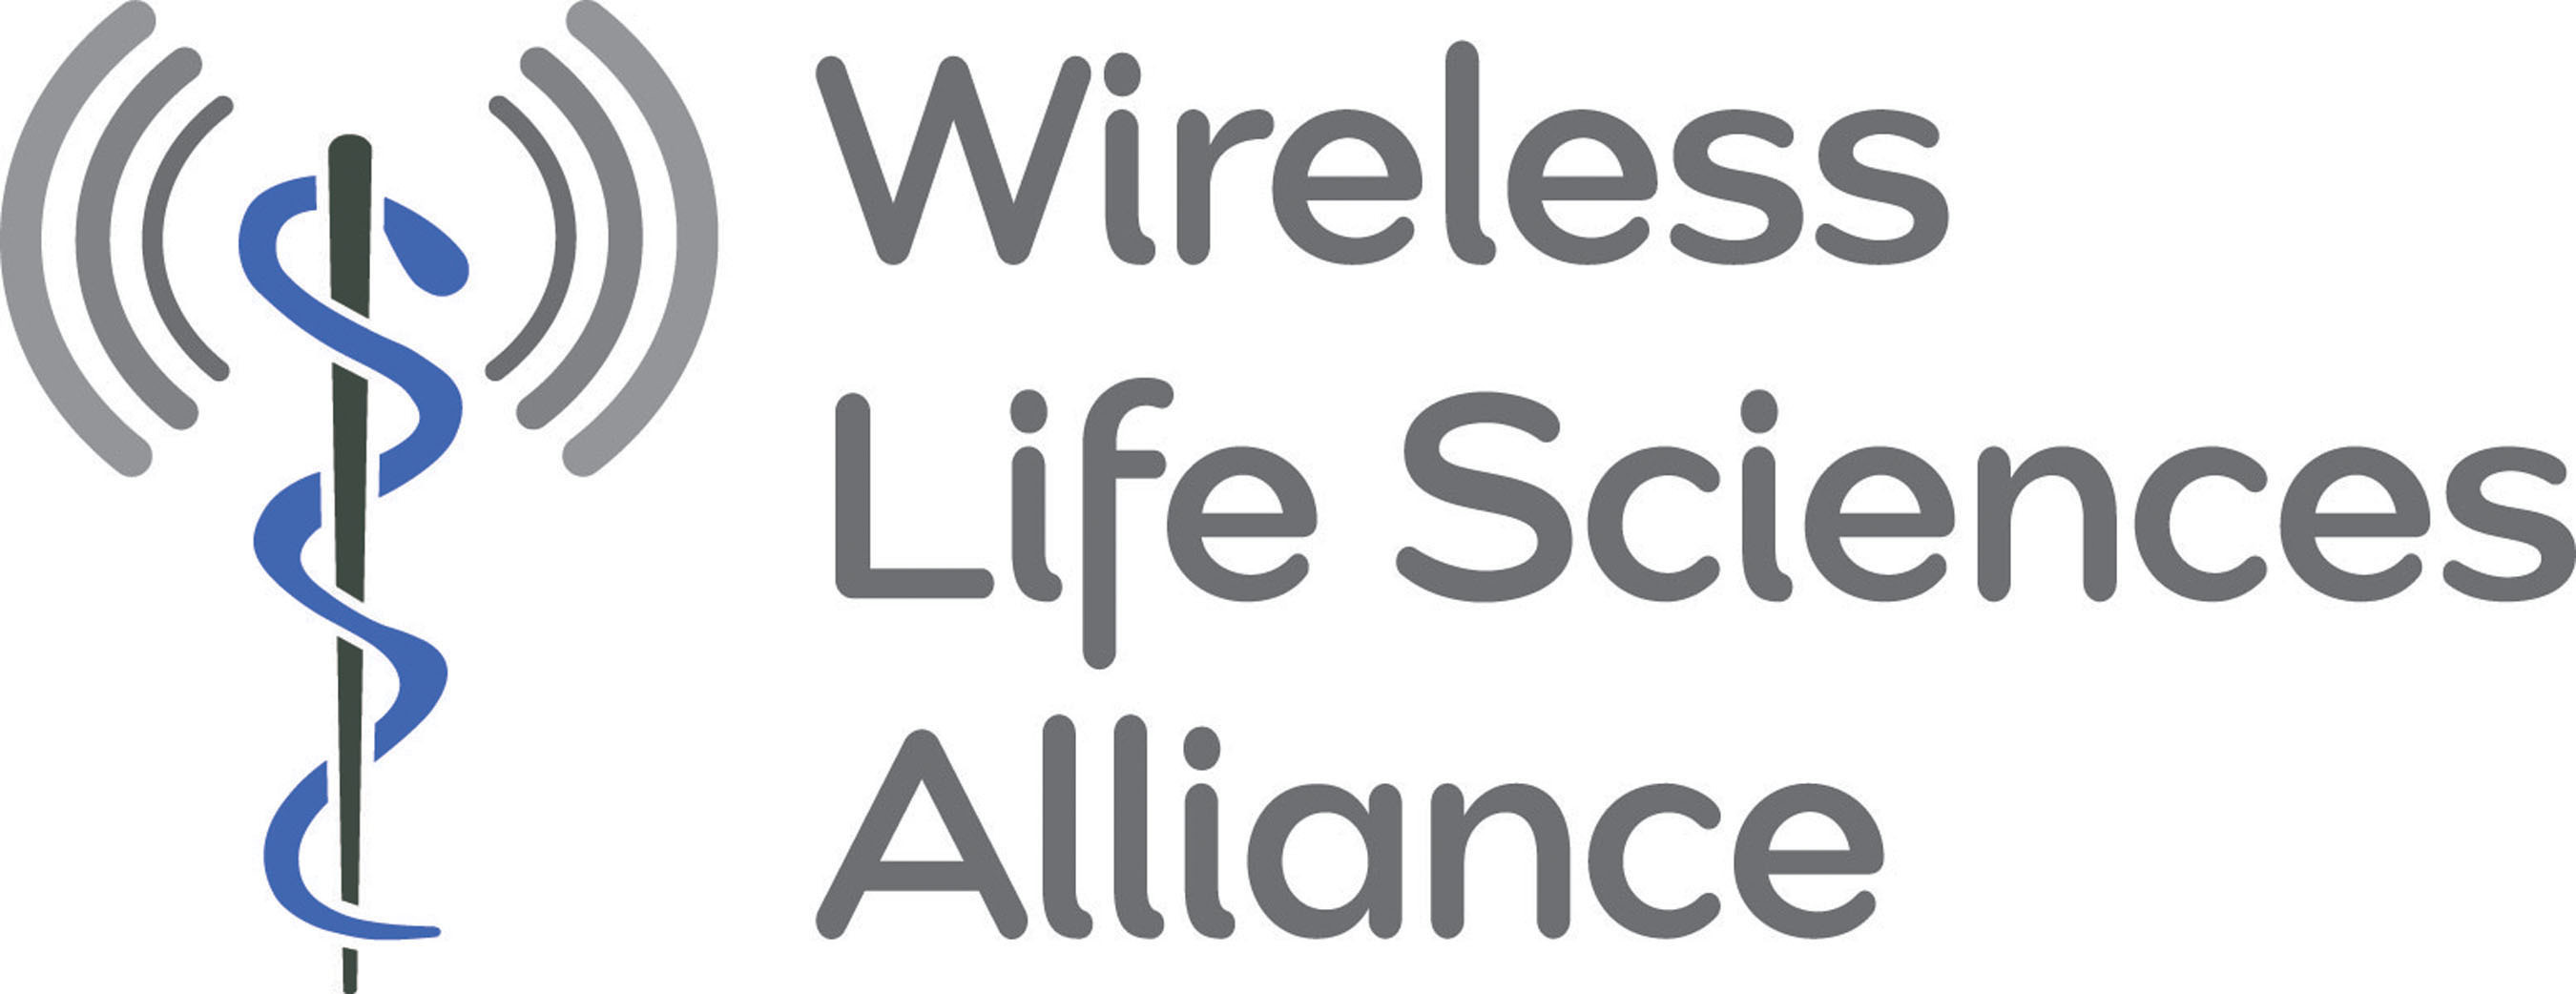 Wireless-Life Sciences Alliance Logo.